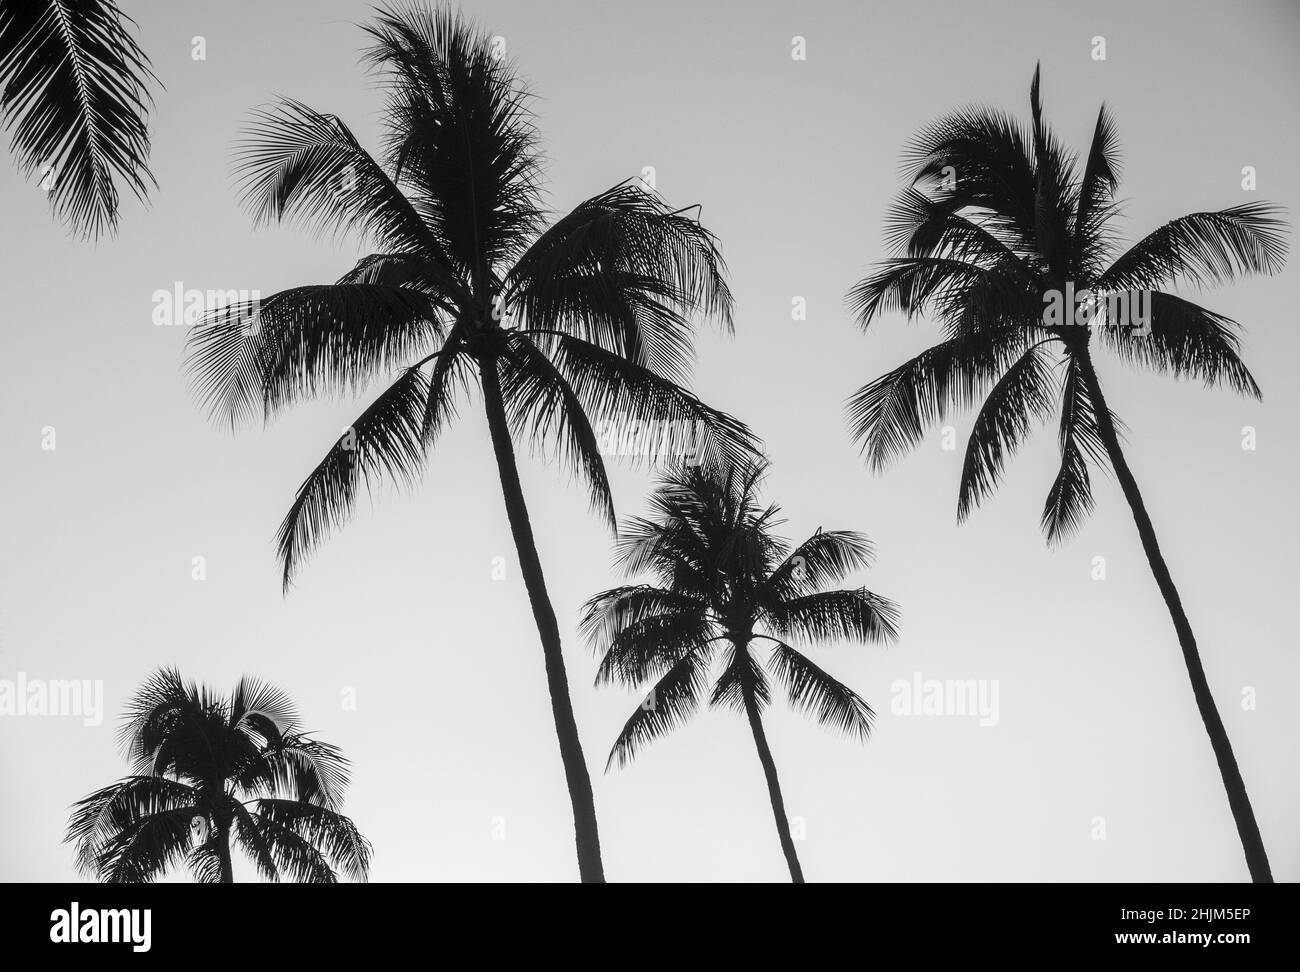 A Monochrome Image Of Beautiful Palm Trees In Waikiki, Hawaii Stock Photo